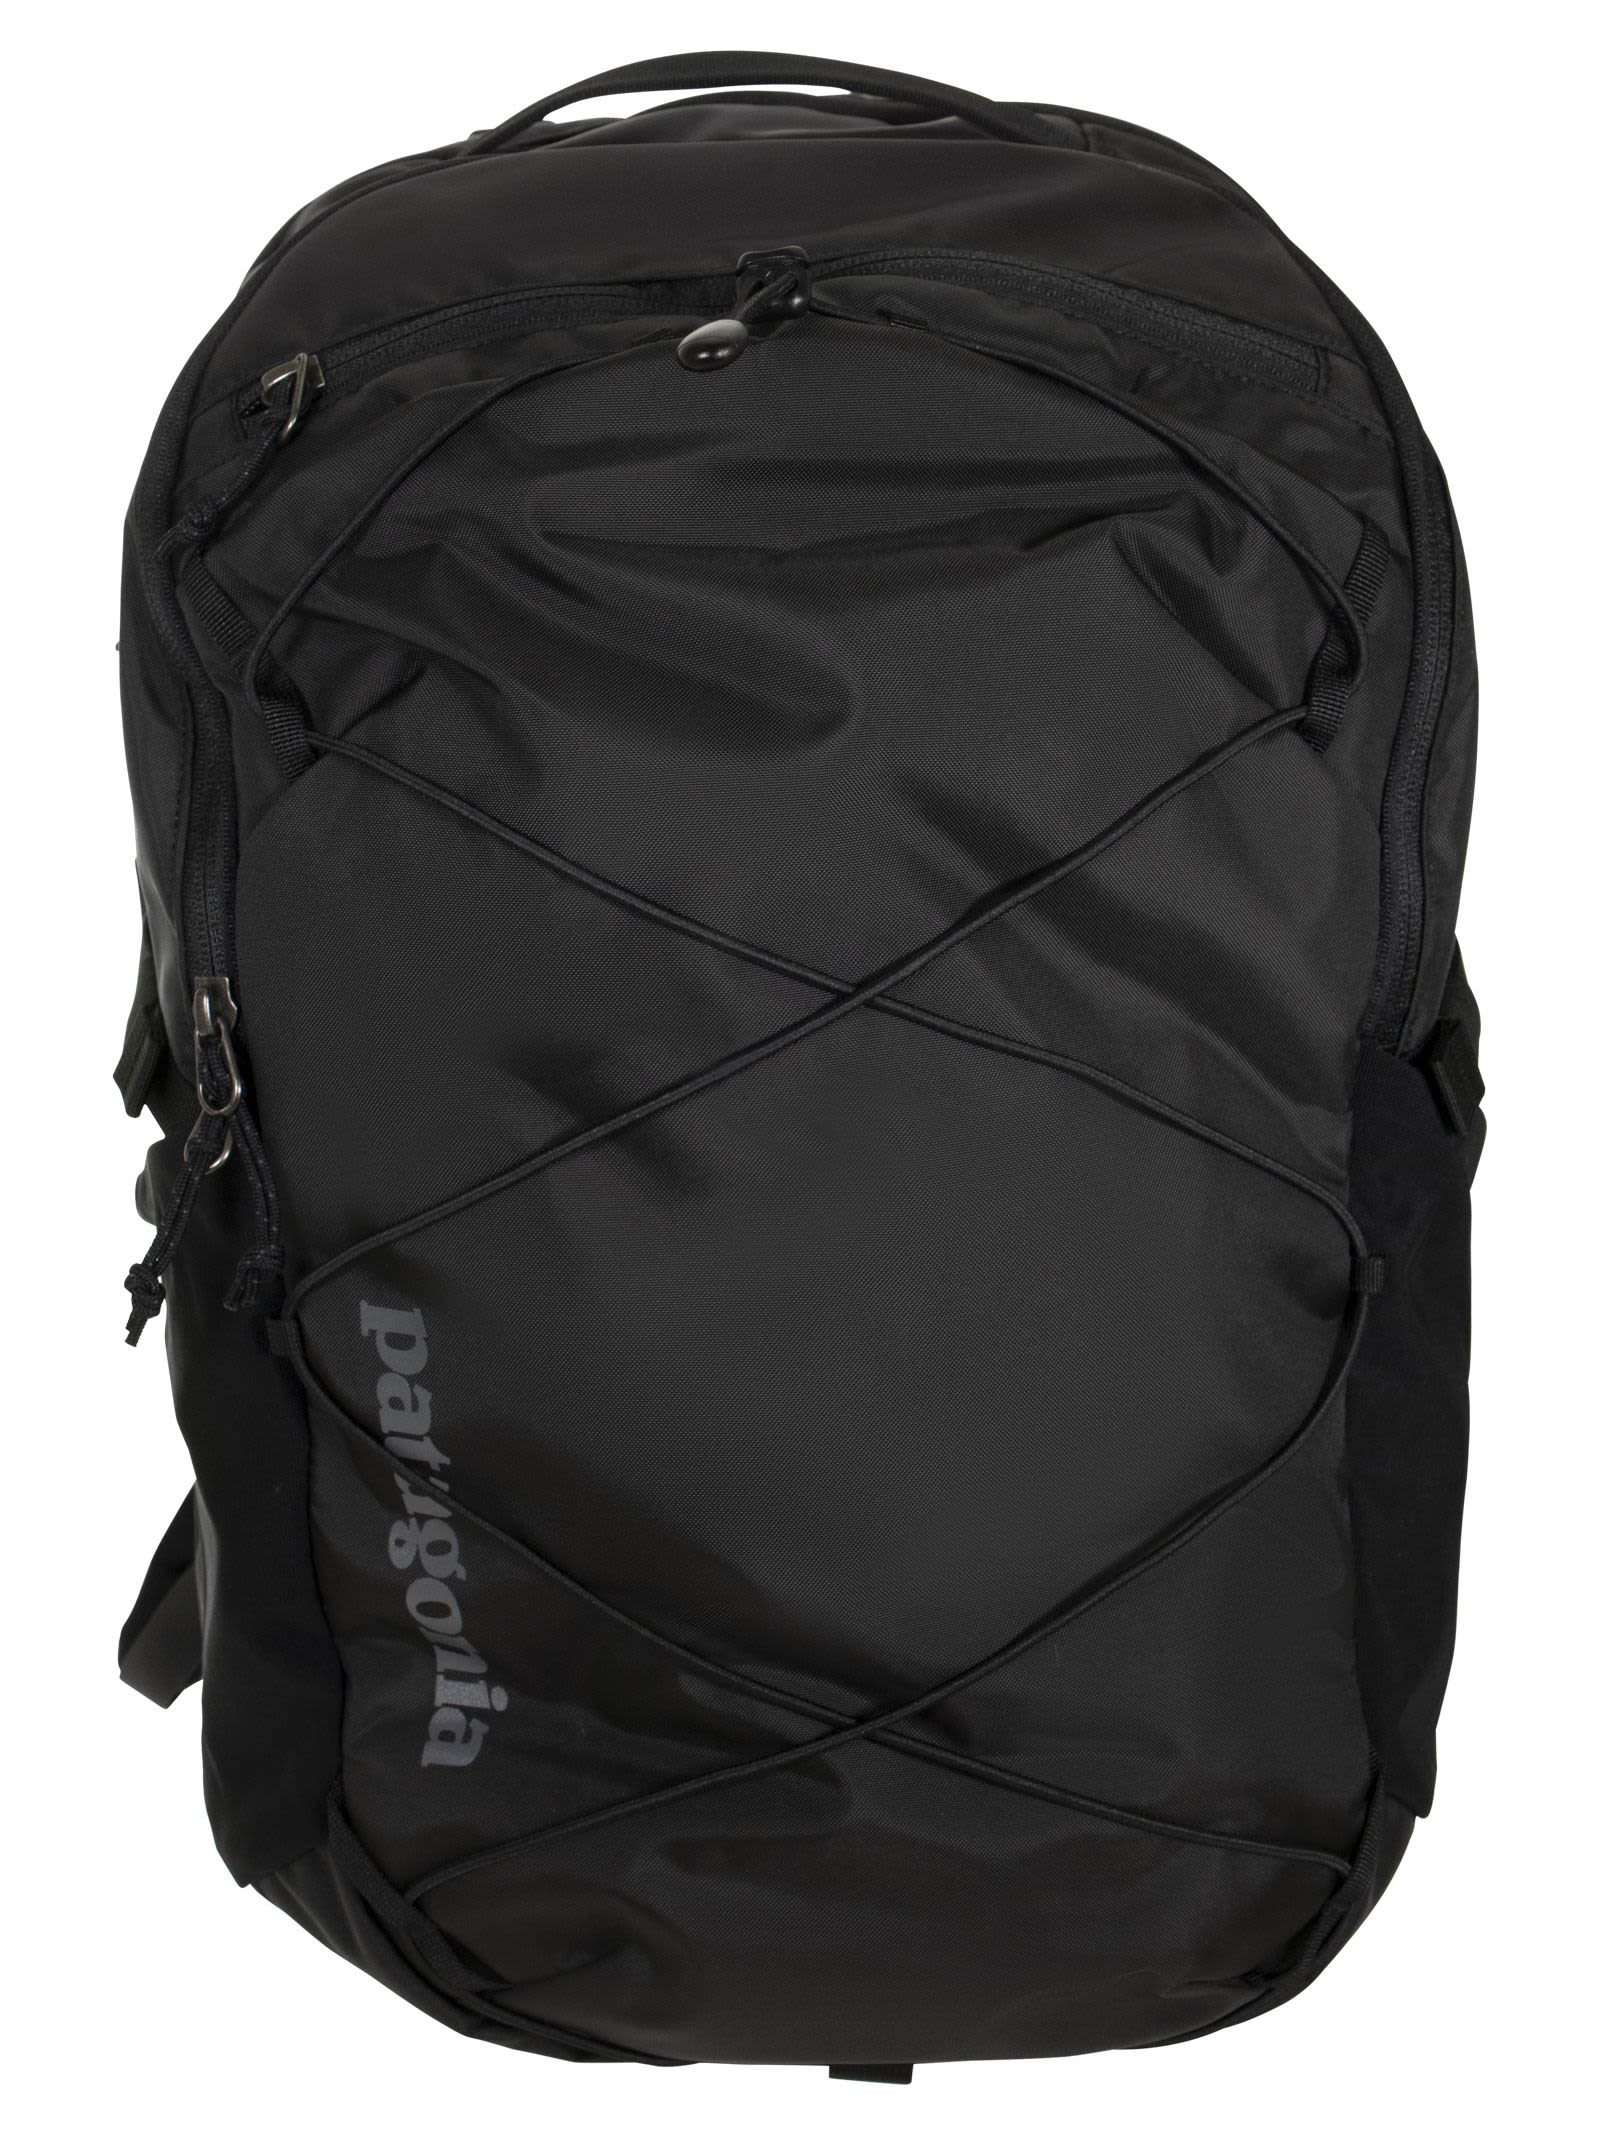 Patagonia Refugio Day Pack - Backpack In Black